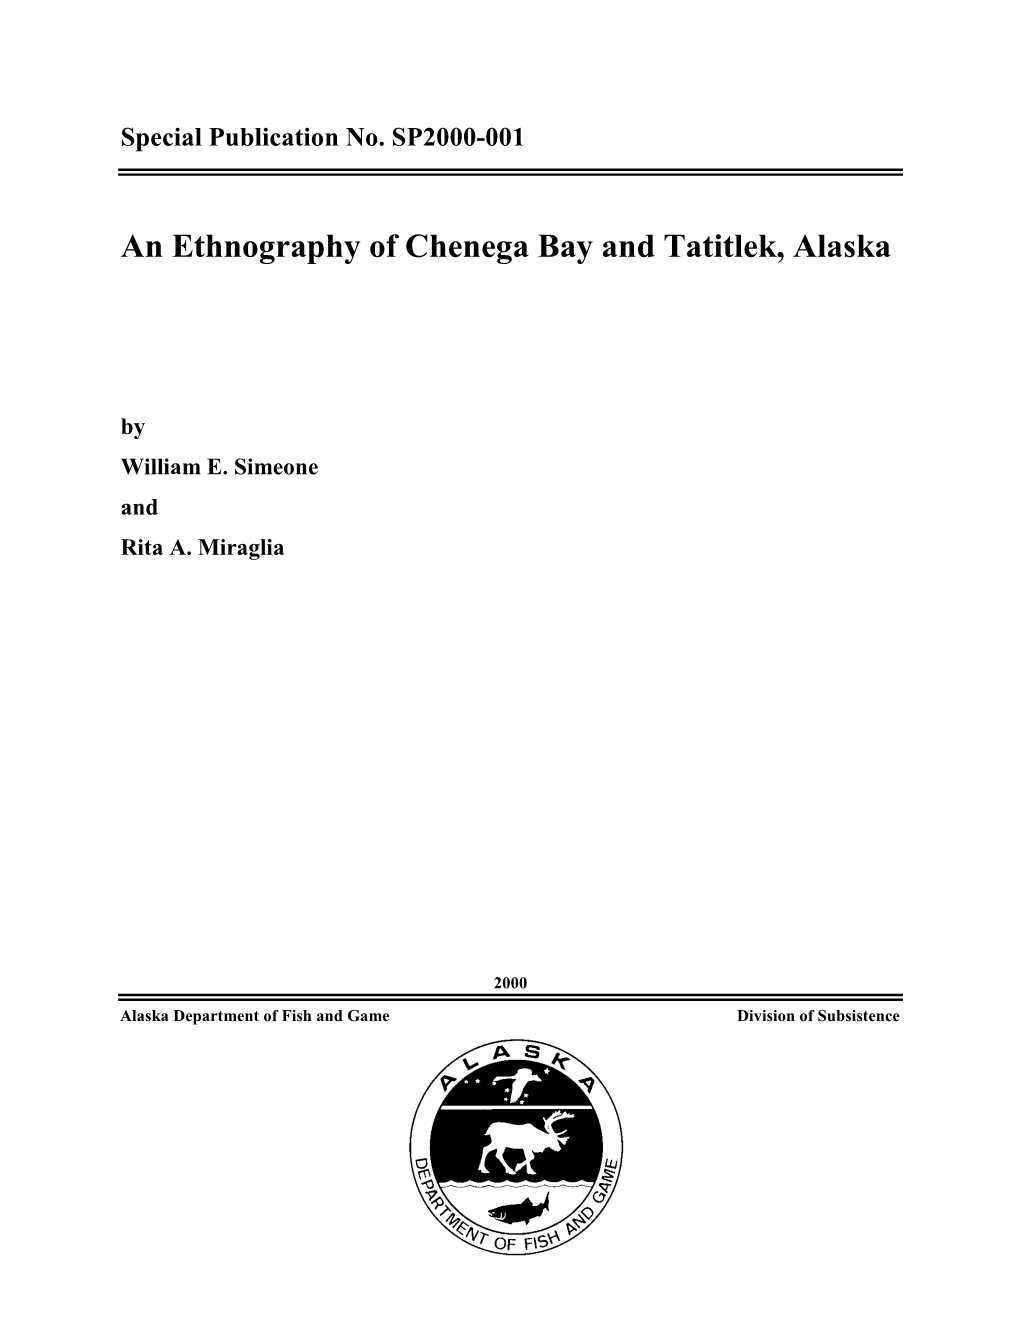 An Ethnography of Chenega Bay and Tatitlek, Alaska